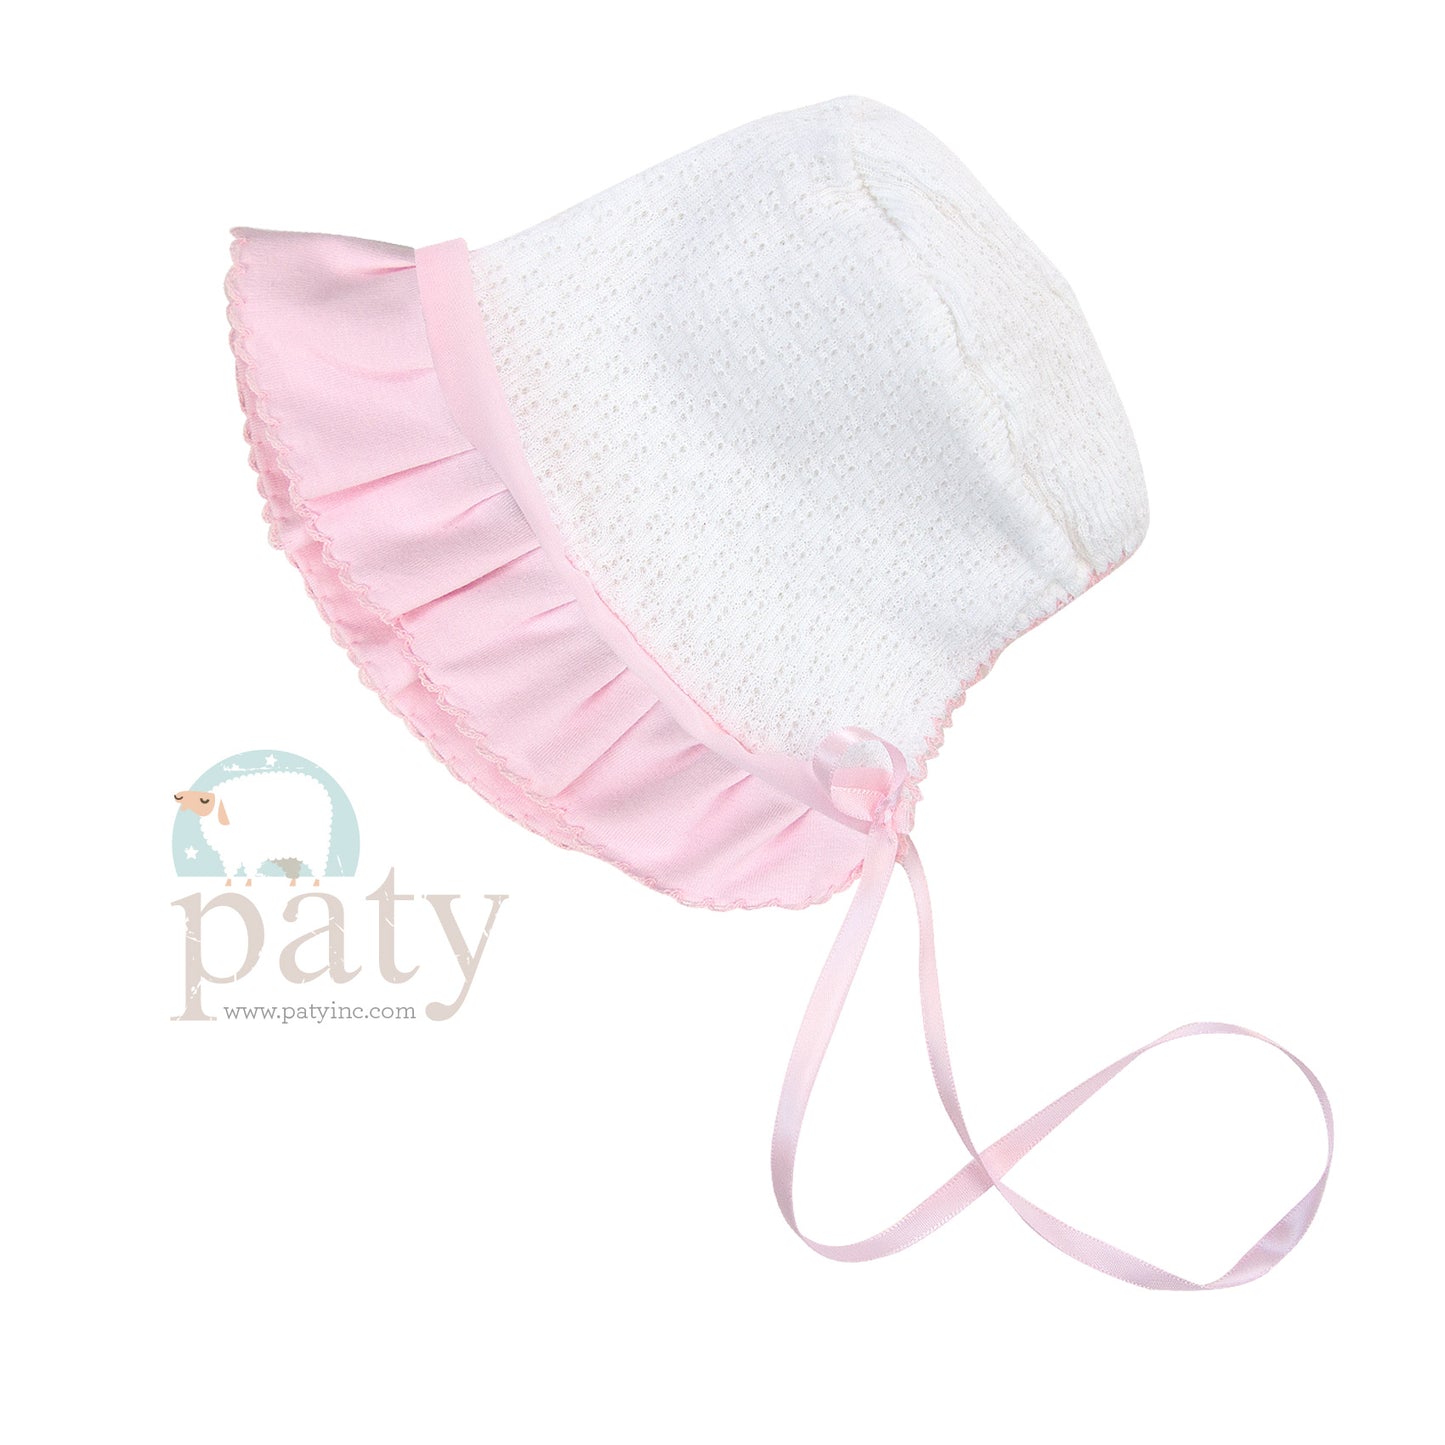 Paty Inc White Knit Bonnet With Cotton & Chiffon Trim (White/Pink Options)